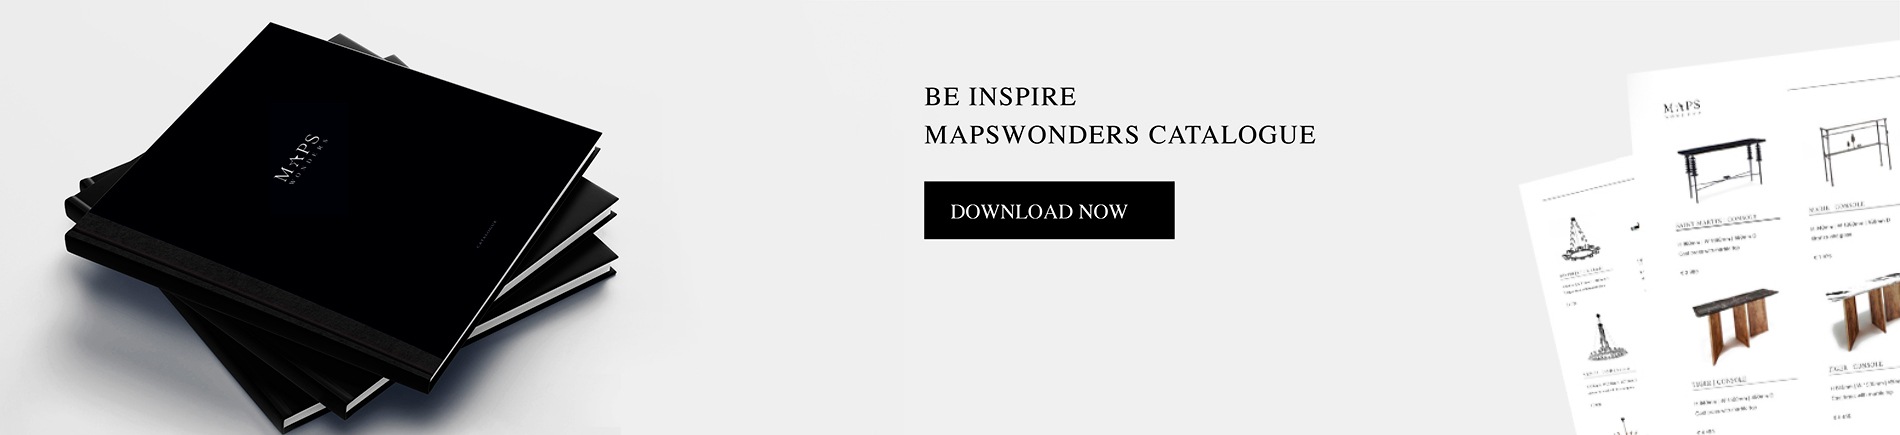 Mapswonders-Catalogue-Download-furniture-lighting-01